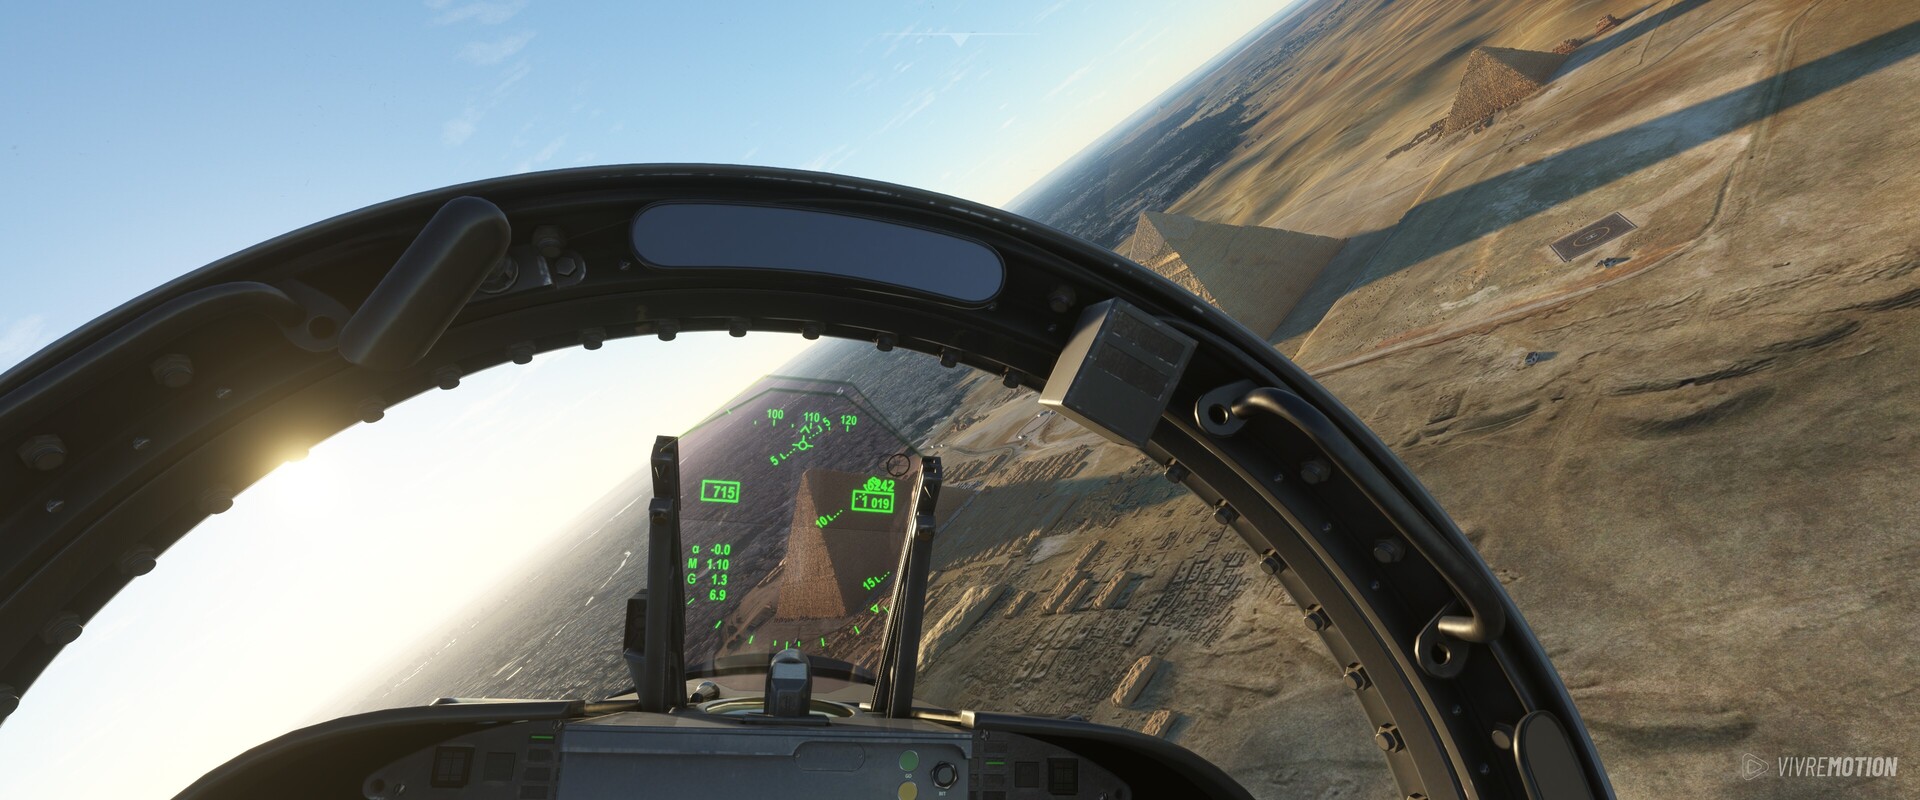 Egypt Giza Pyramid of Chephren - Boeing F/A-18 Super Hornet - Microsoft Flight Simulator - VIVRE-MOTION